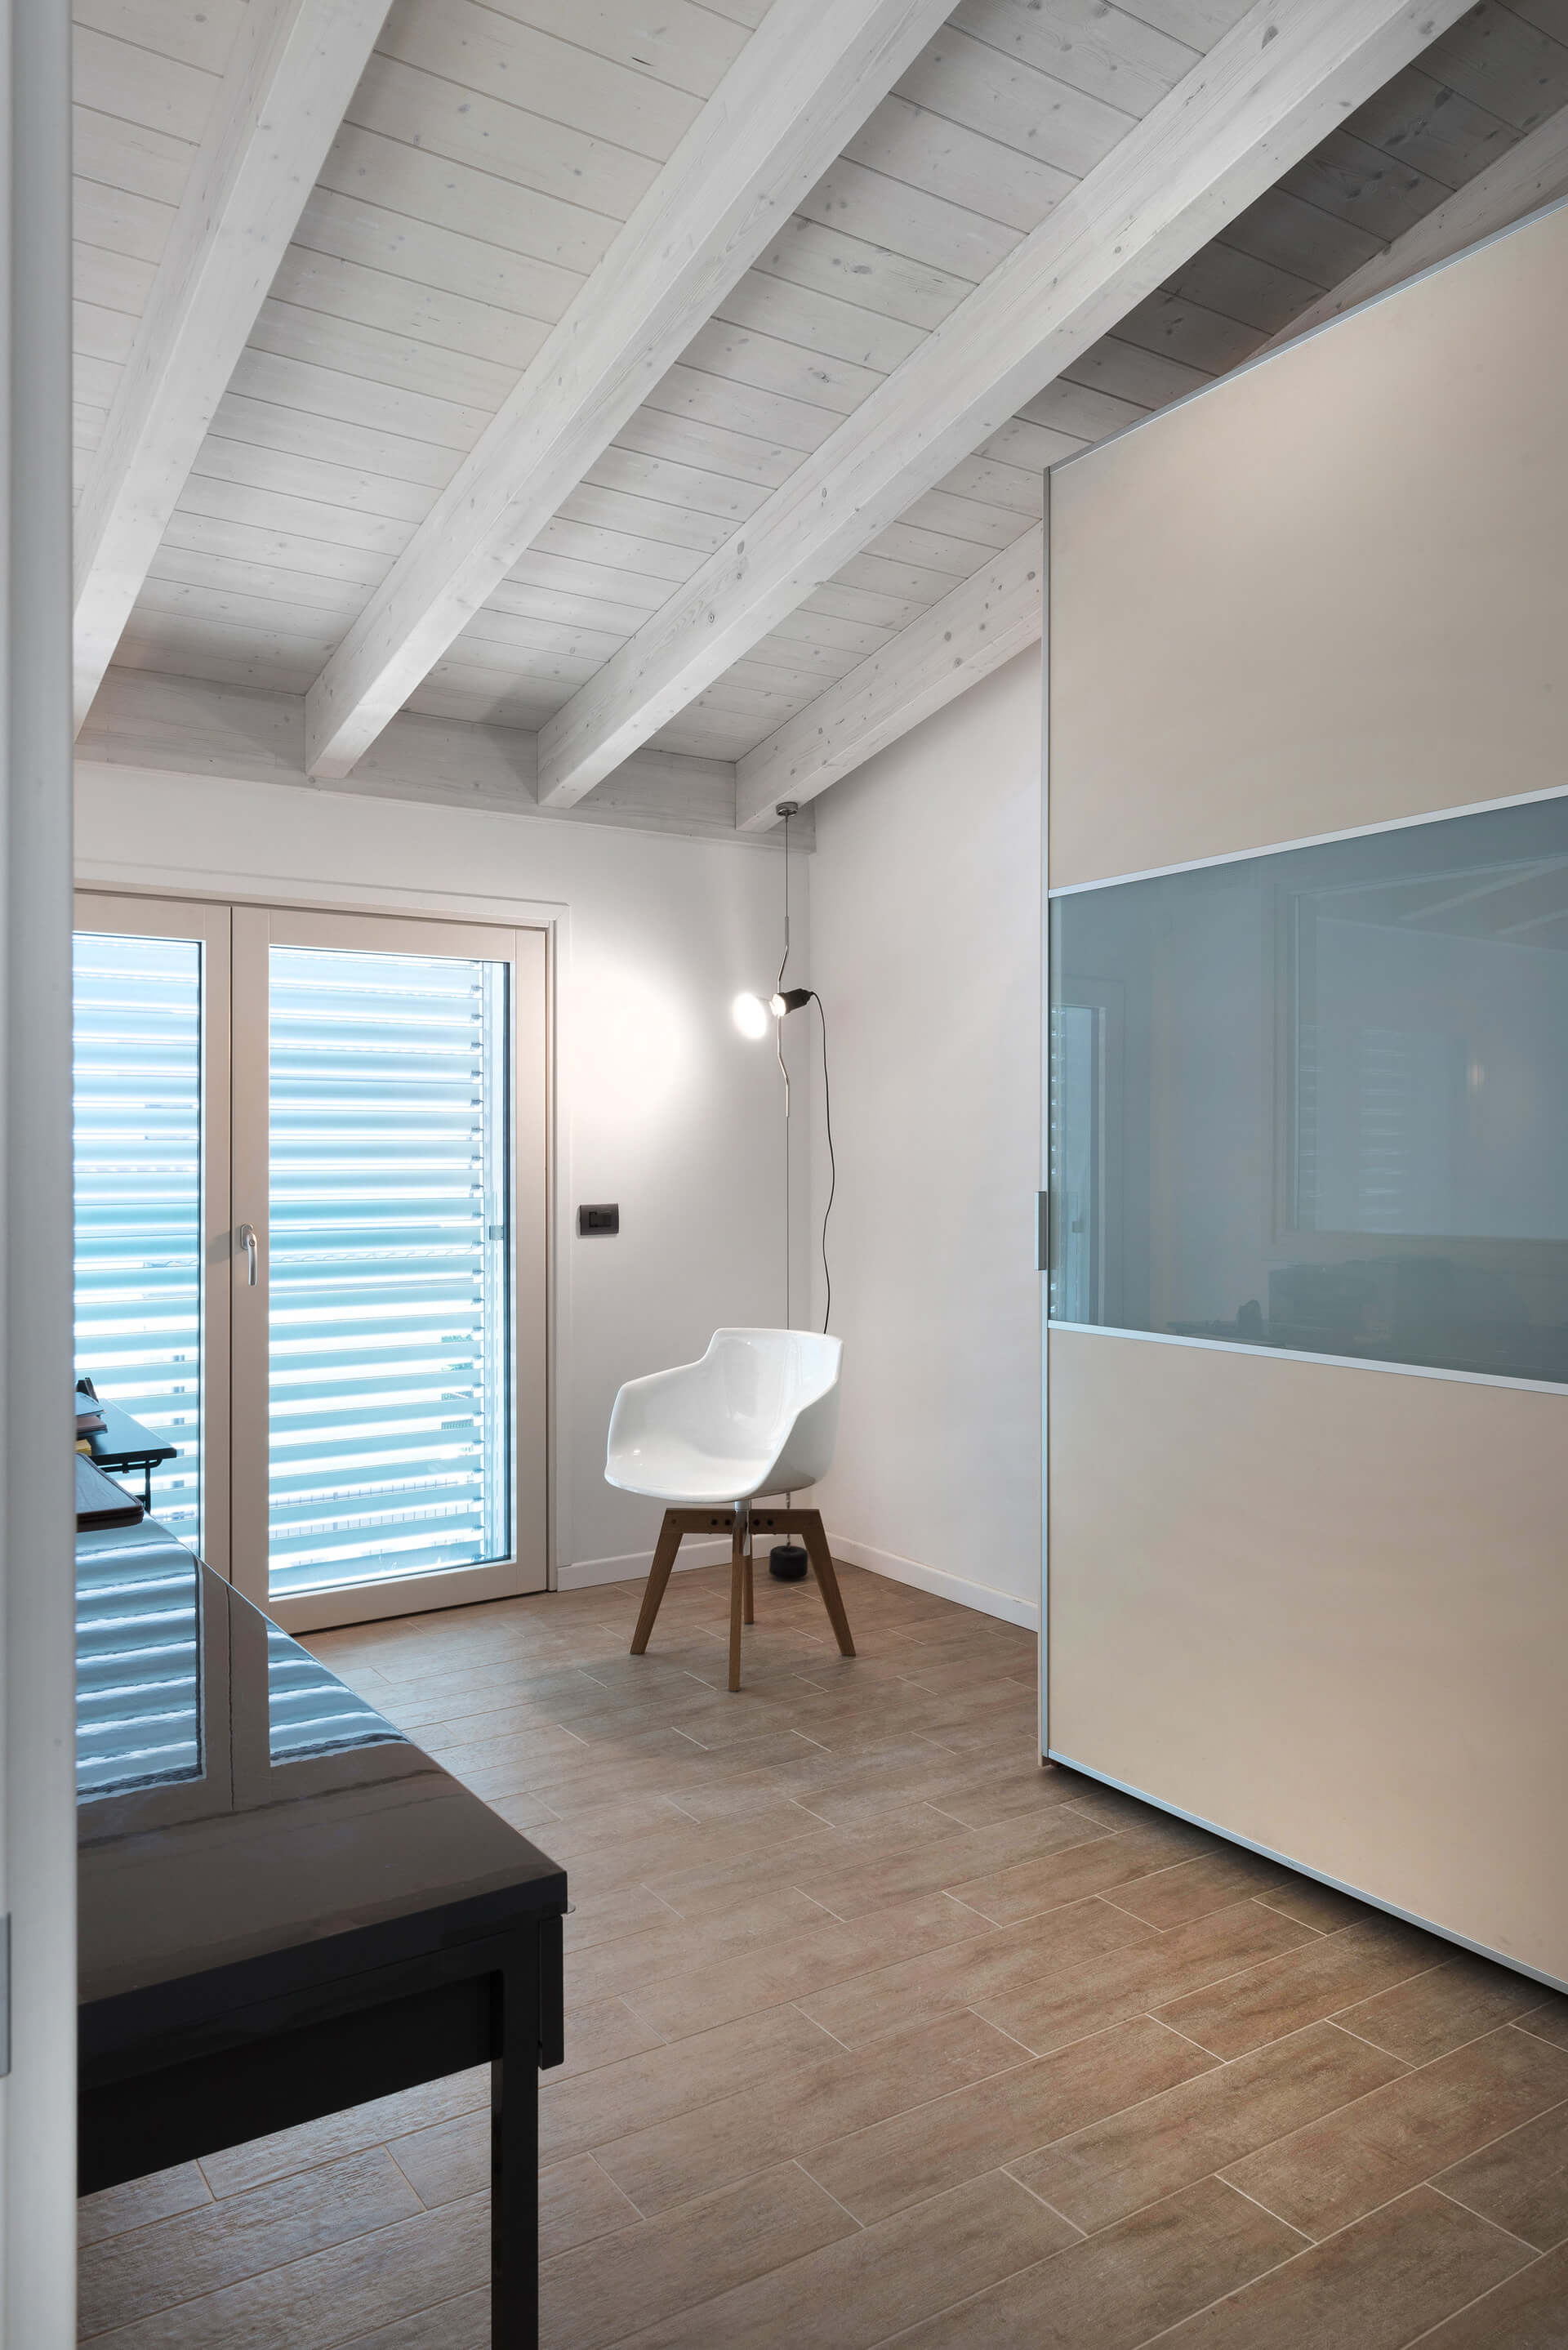 Architettura moderna per una casa passiva a Varese